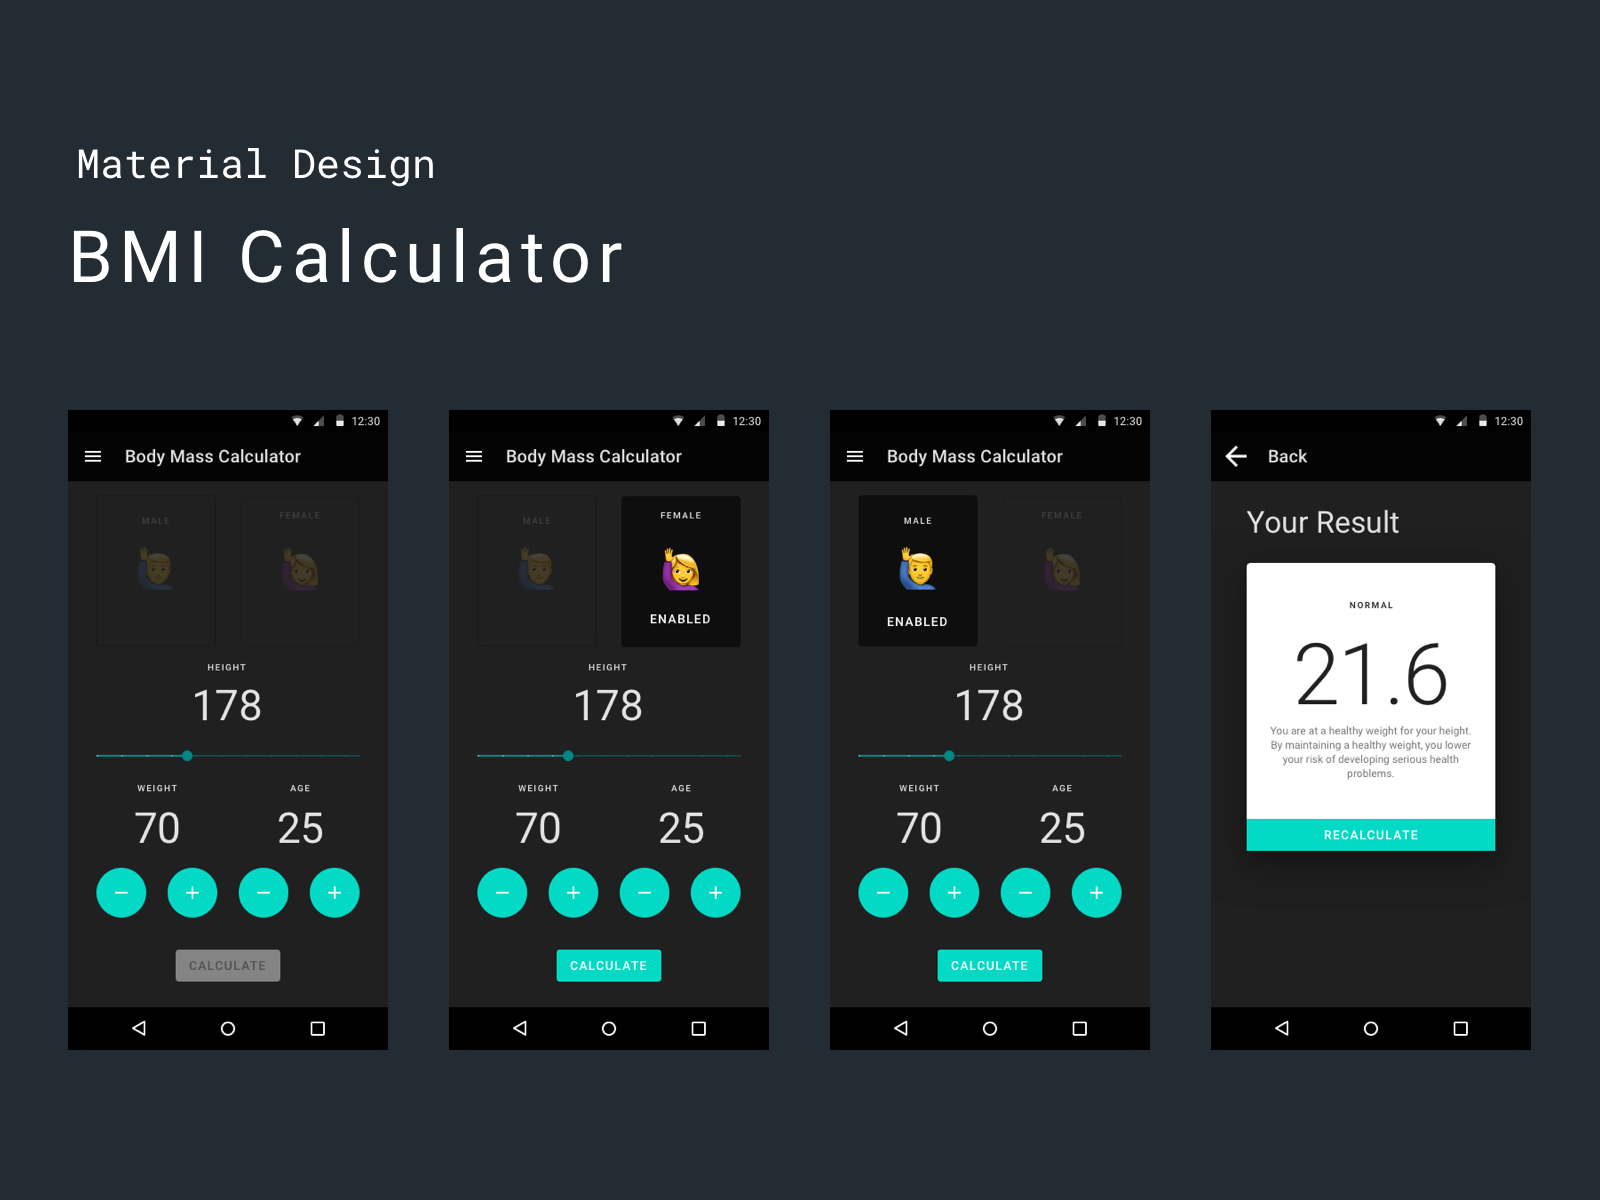 Flutter Template Material Design UI – BMI Calculator App by UI kitty on